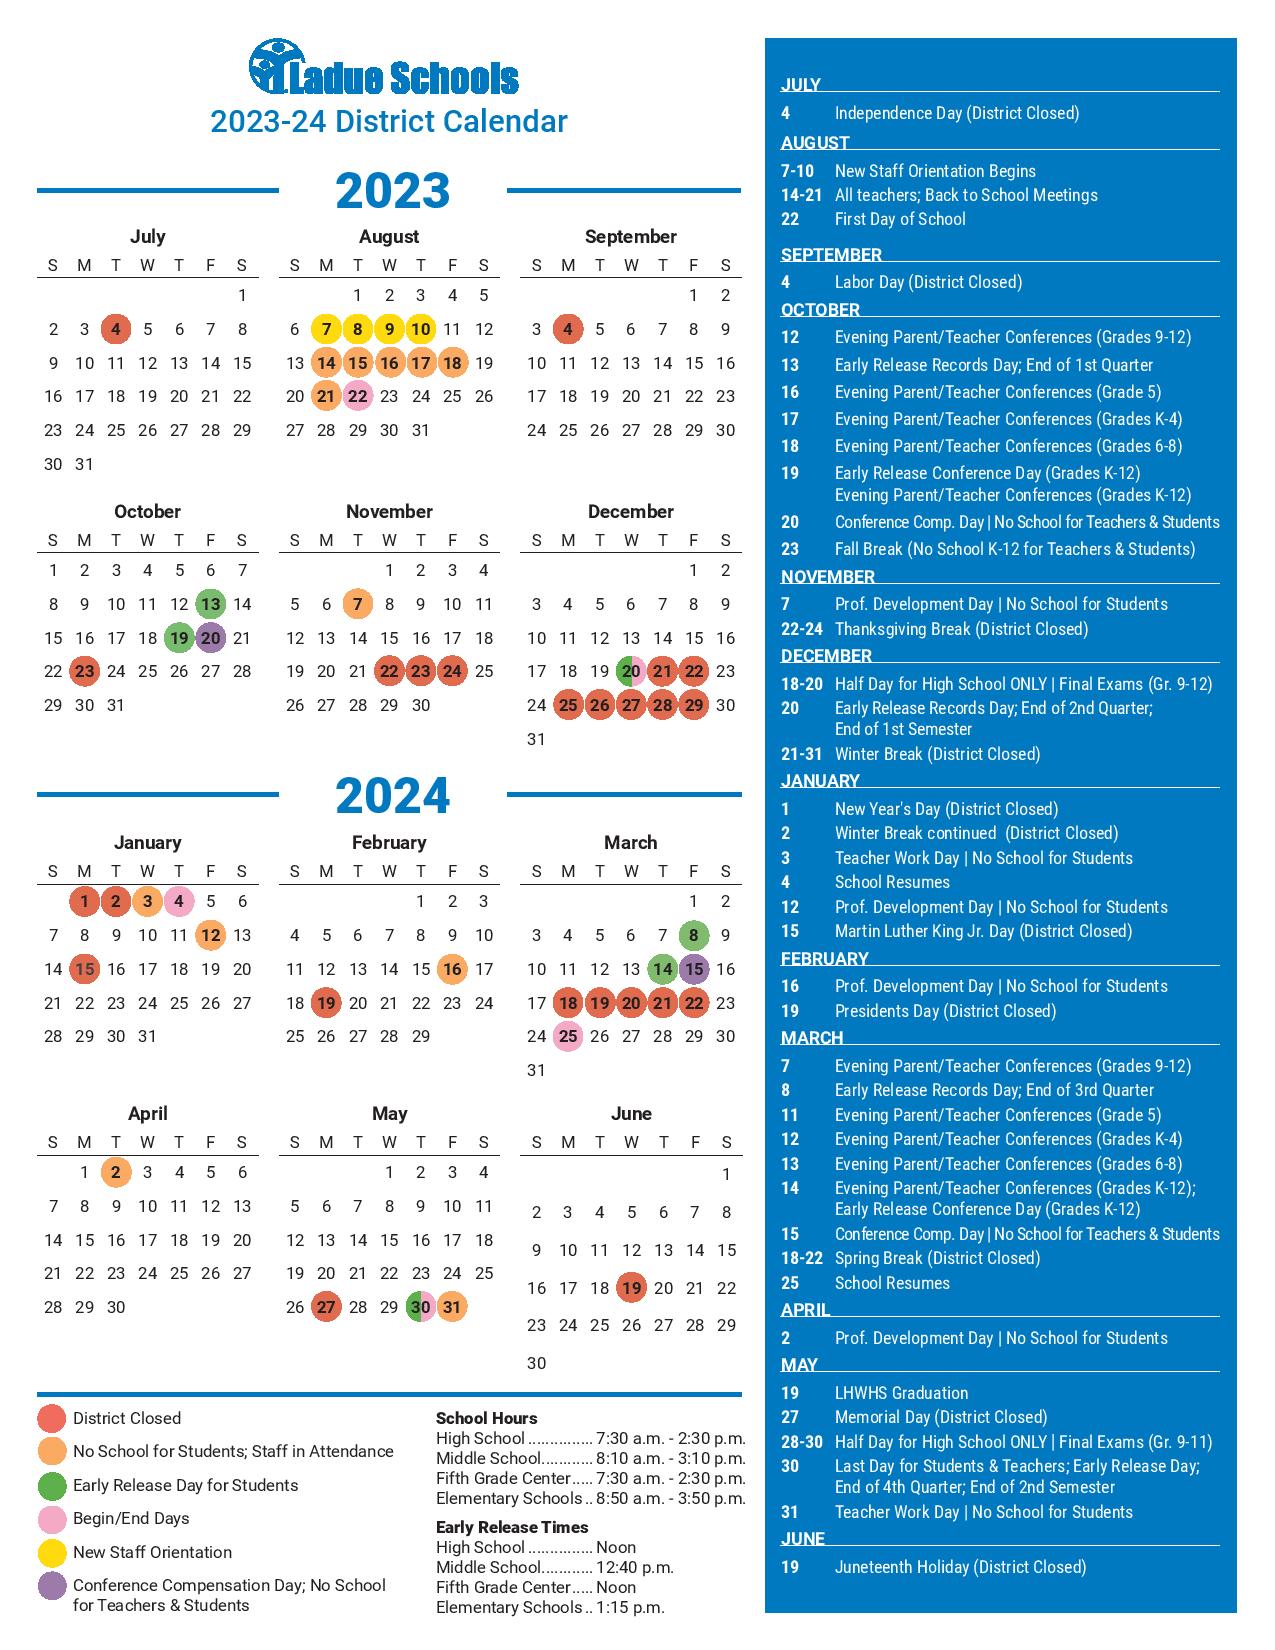 Ladue School District Calendar 20232024 in PDF